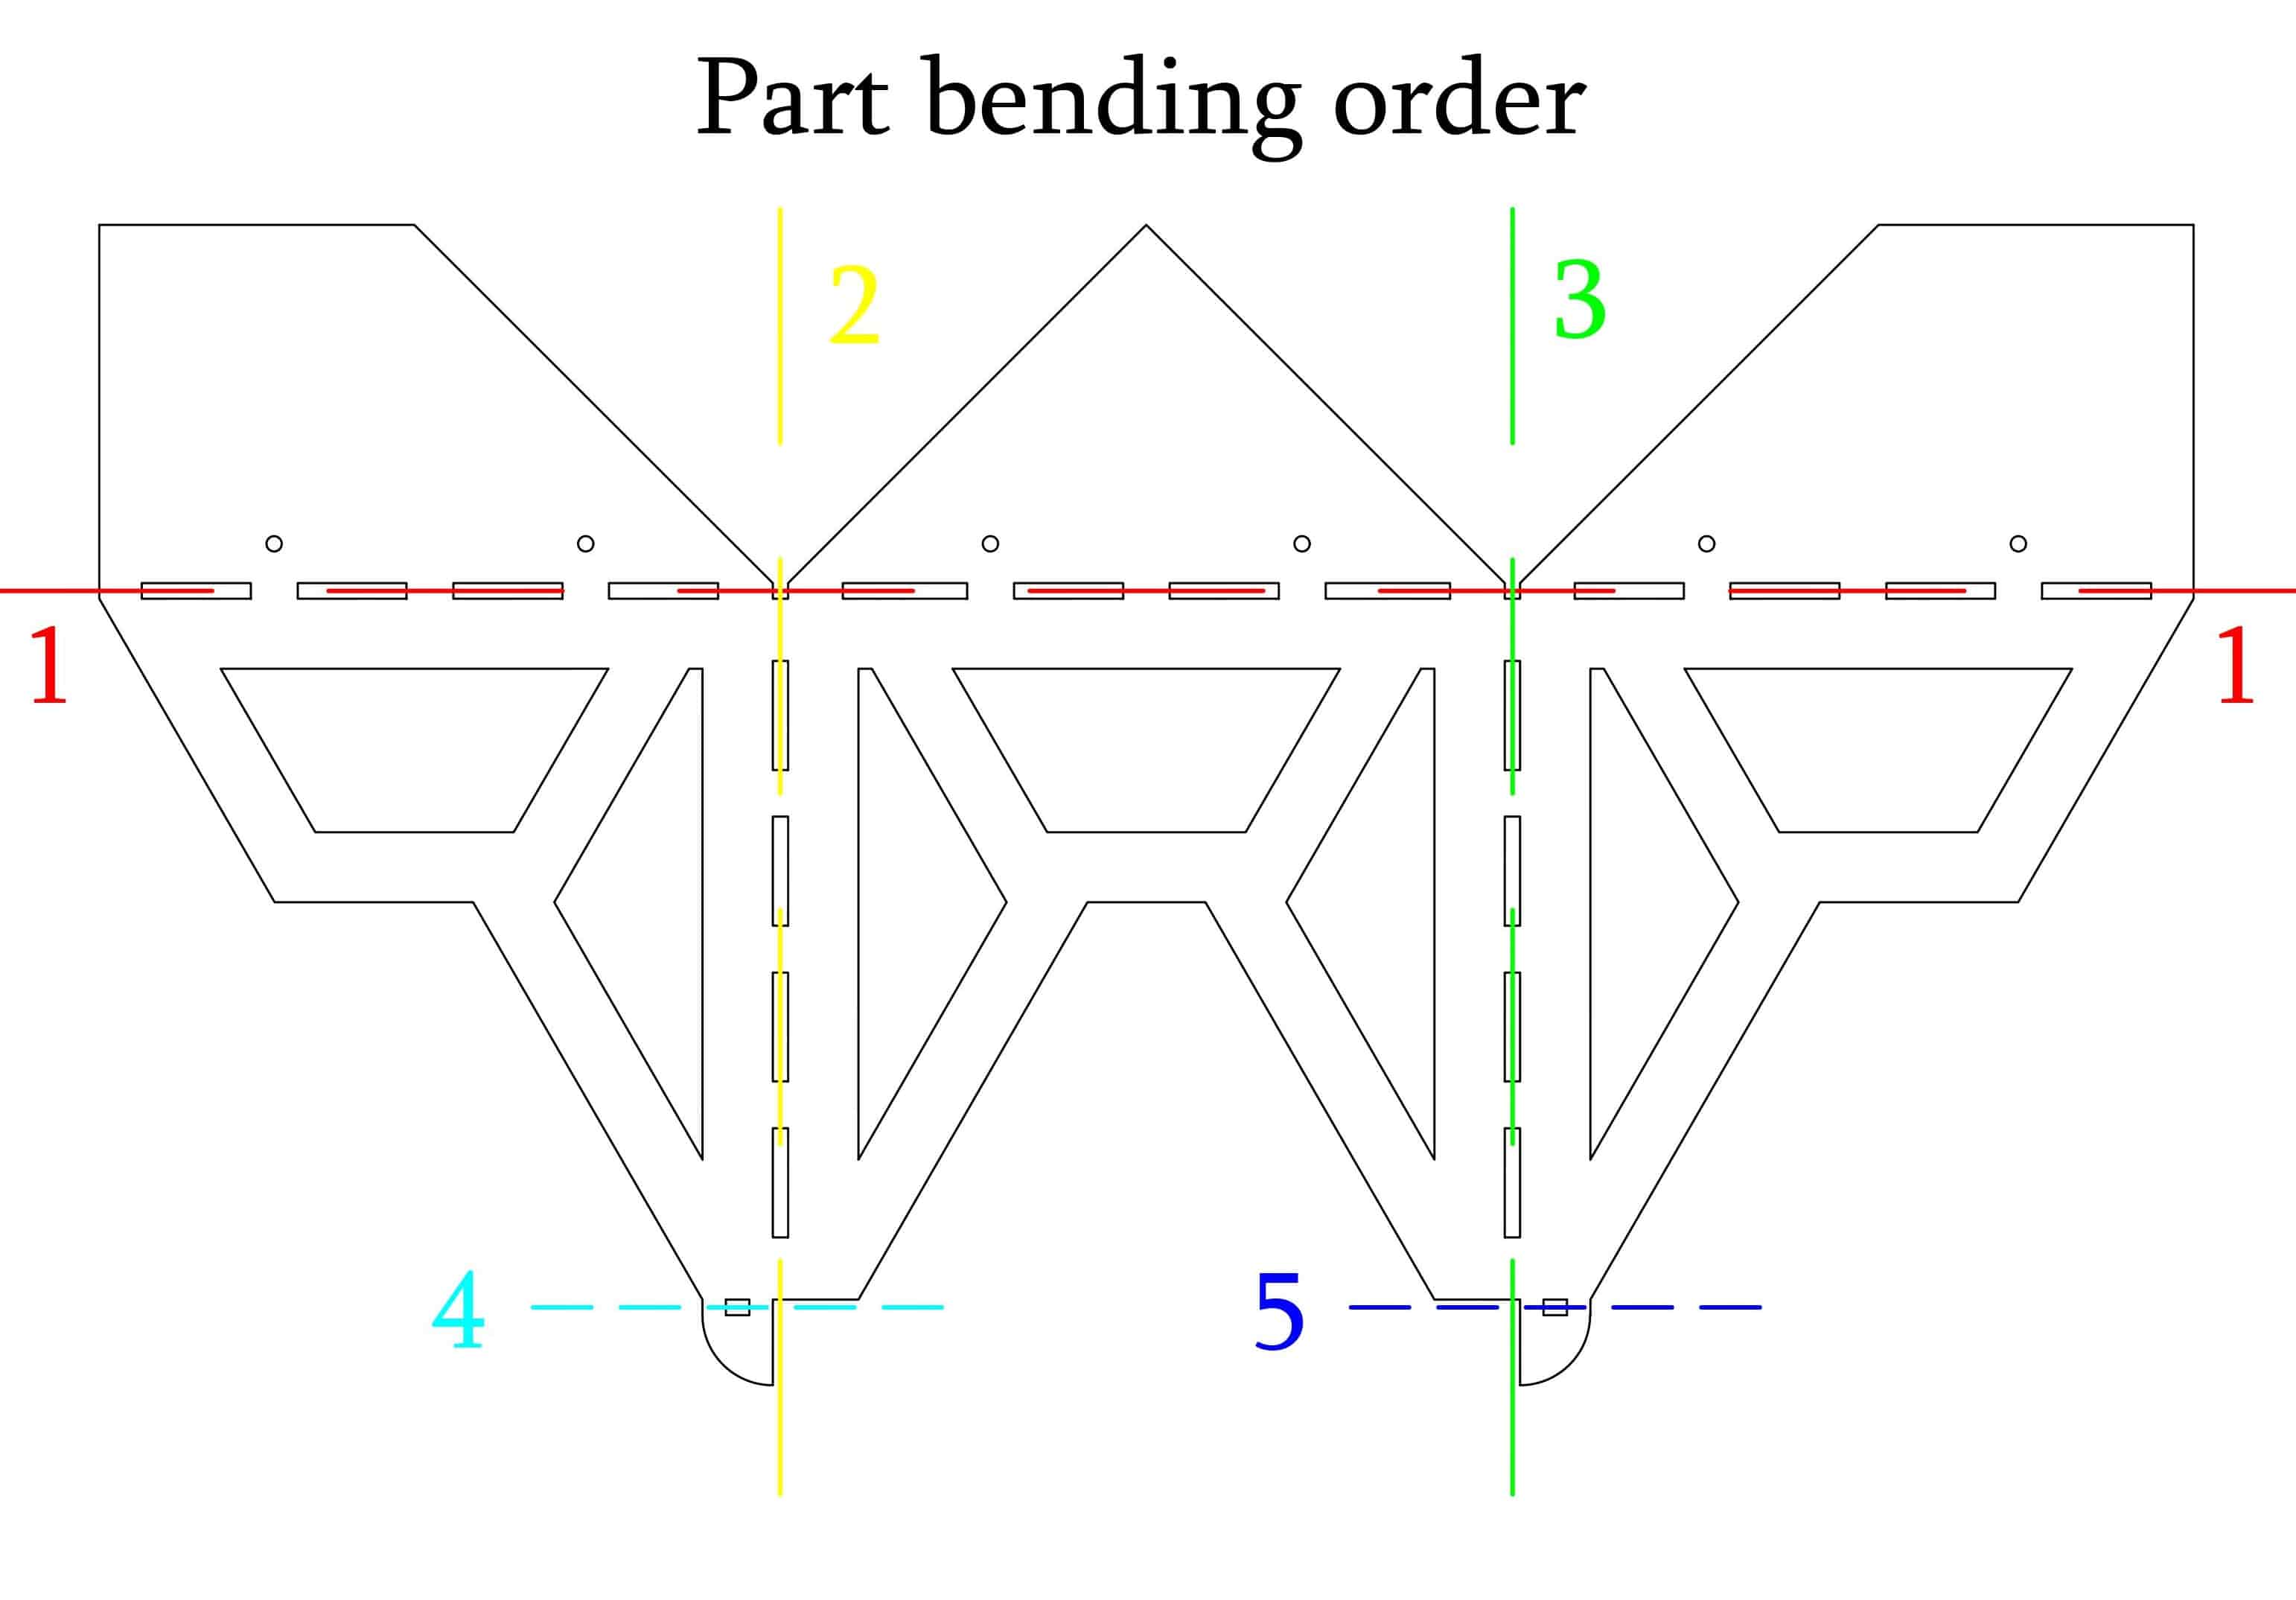 Part bending order